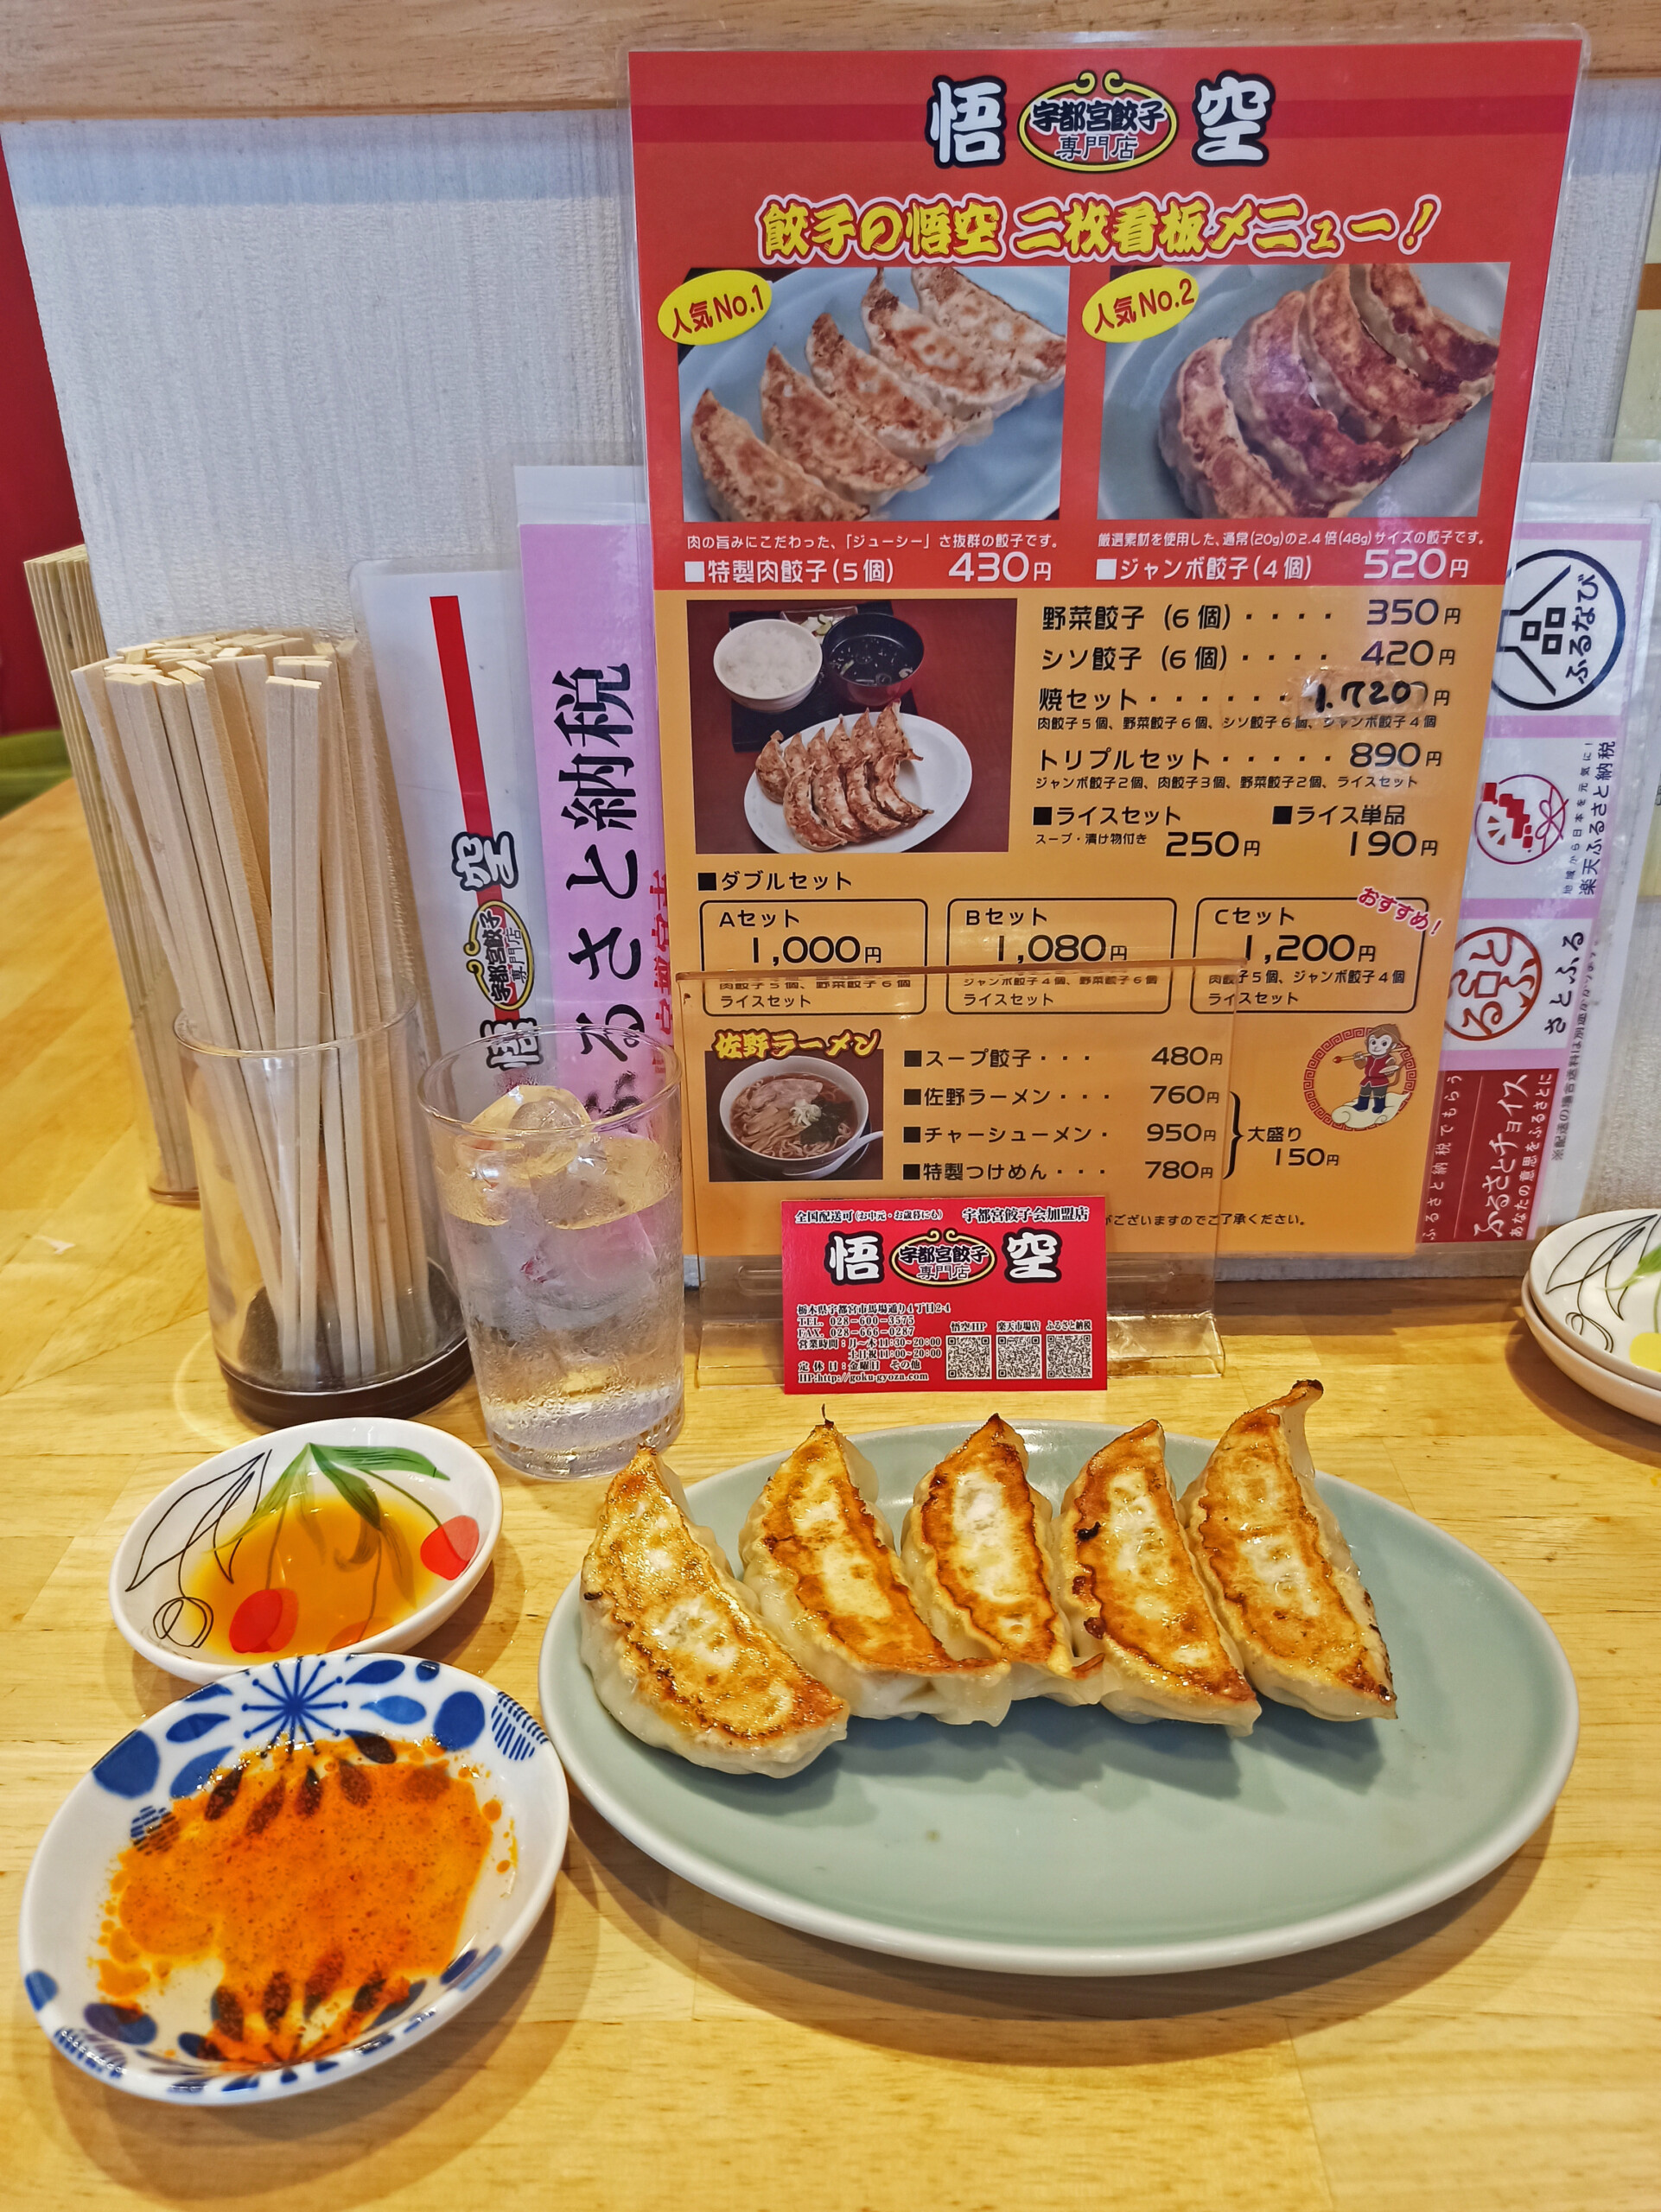 Goku Gyoza Restaurant, Utsunomiya, Tochigi Prefecture